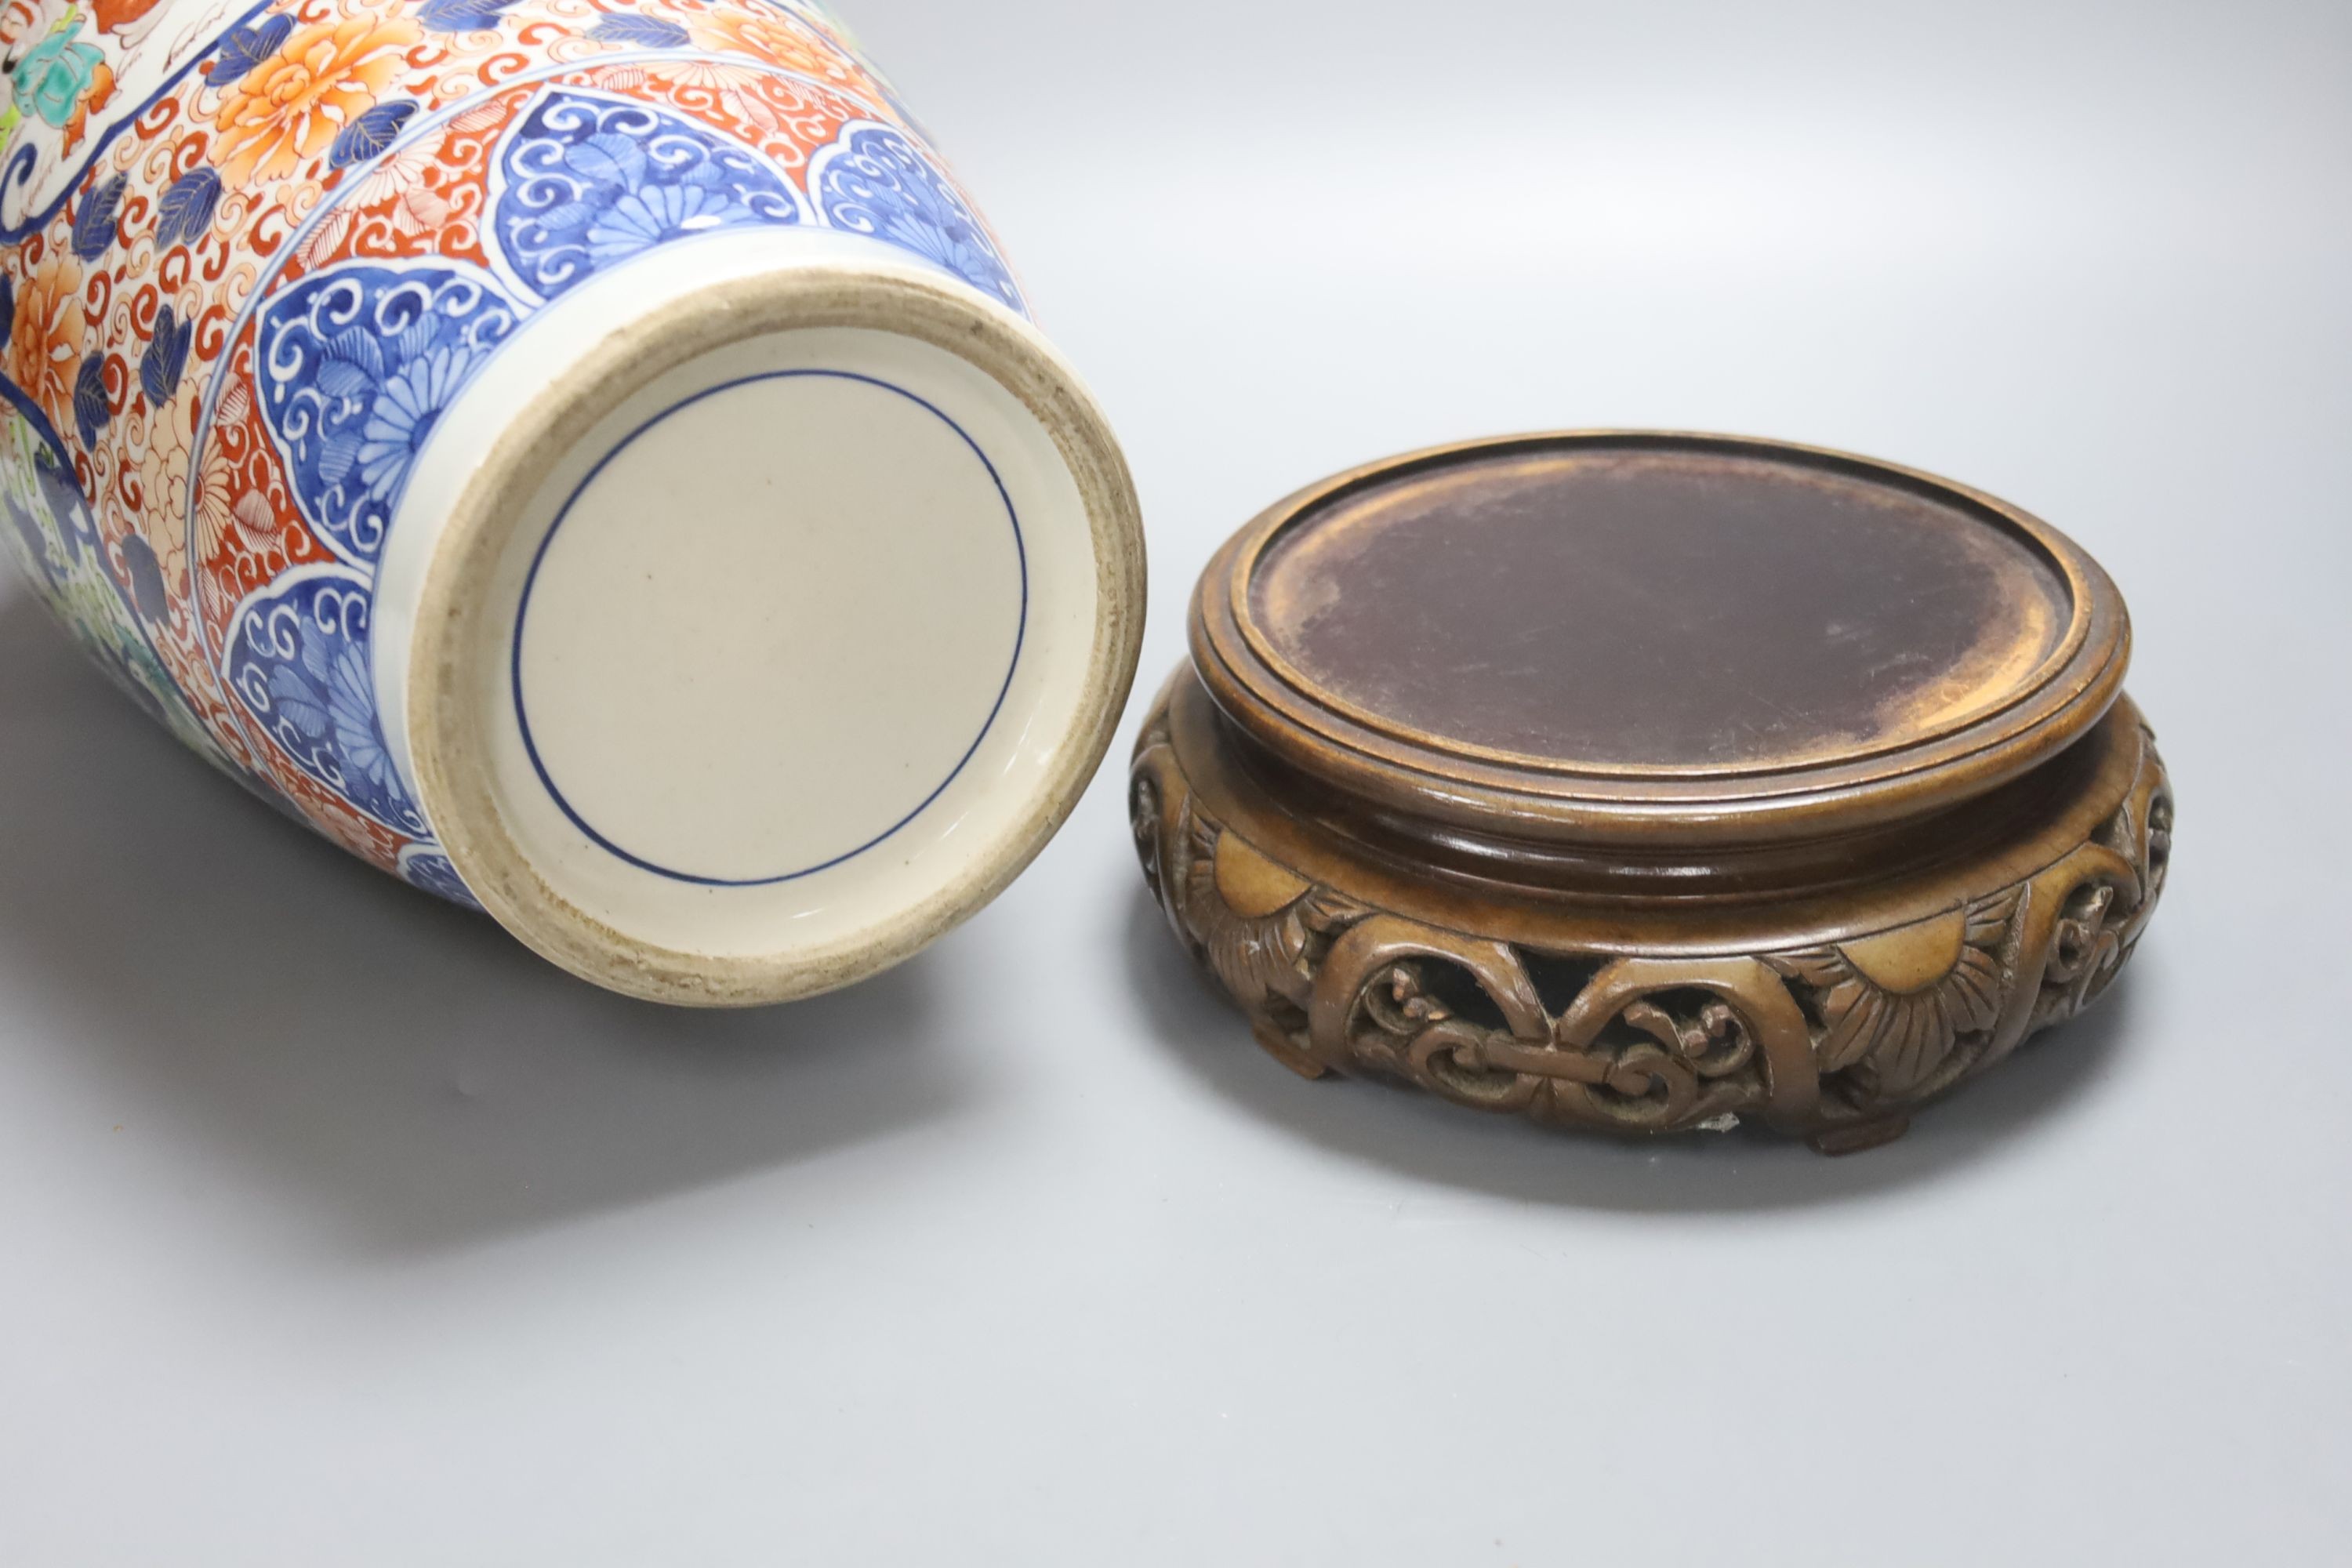 A large 20th century Japanese Arita porcelain vase, wood stand, restored 50cm